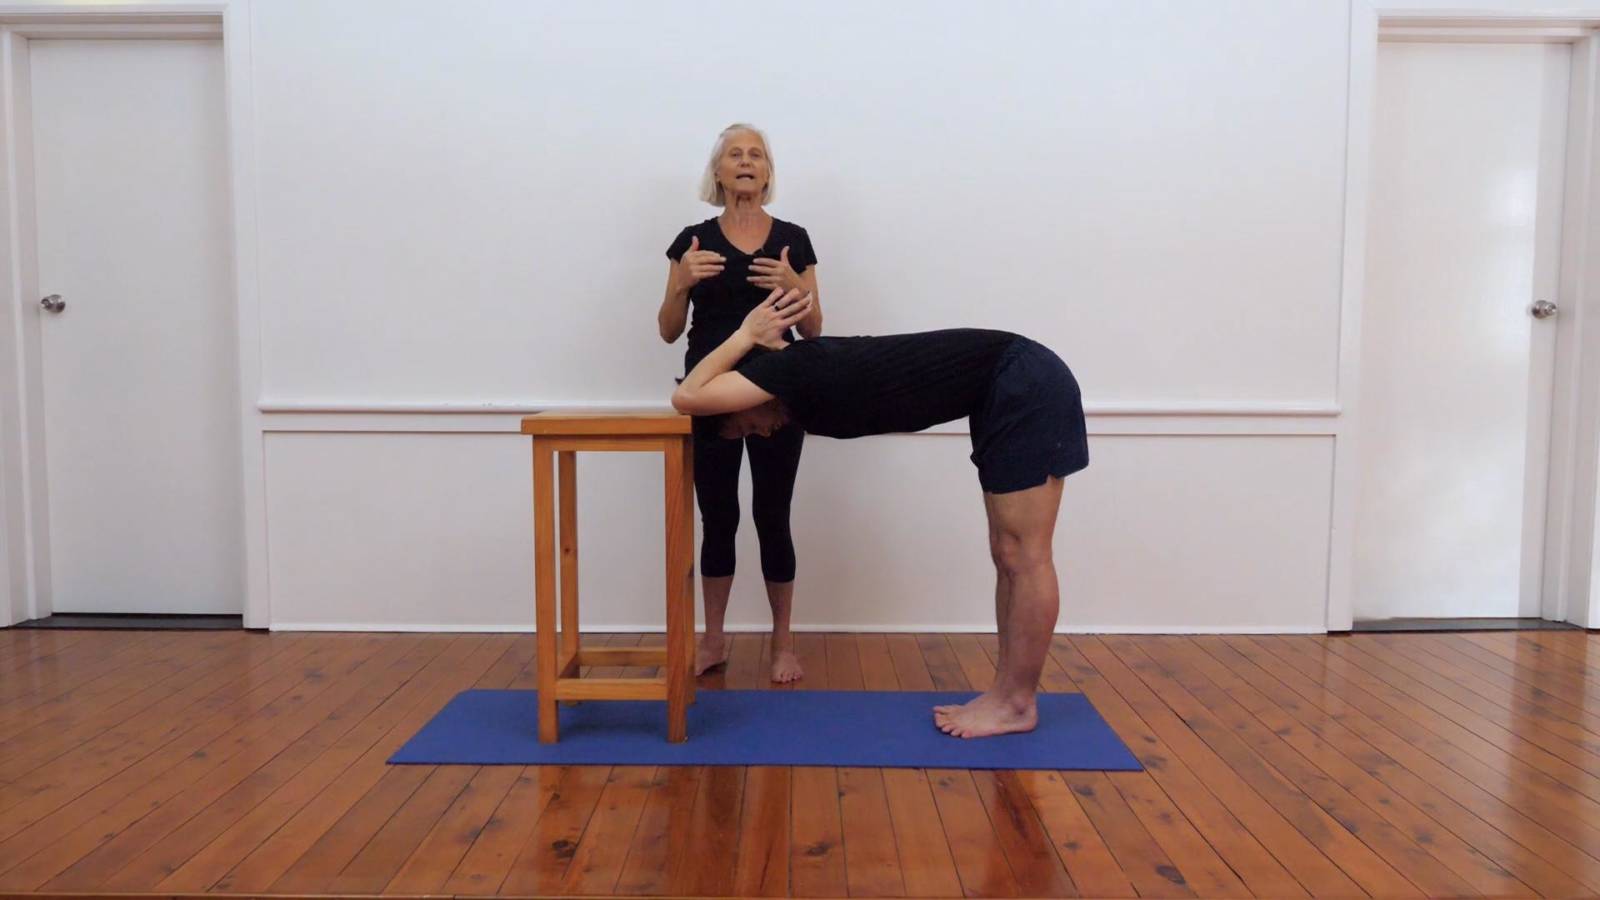 Yoga for tech neck, yoga for neck, free Iyengar Yoga for neck class —  Studio Po Iyengar Yoga